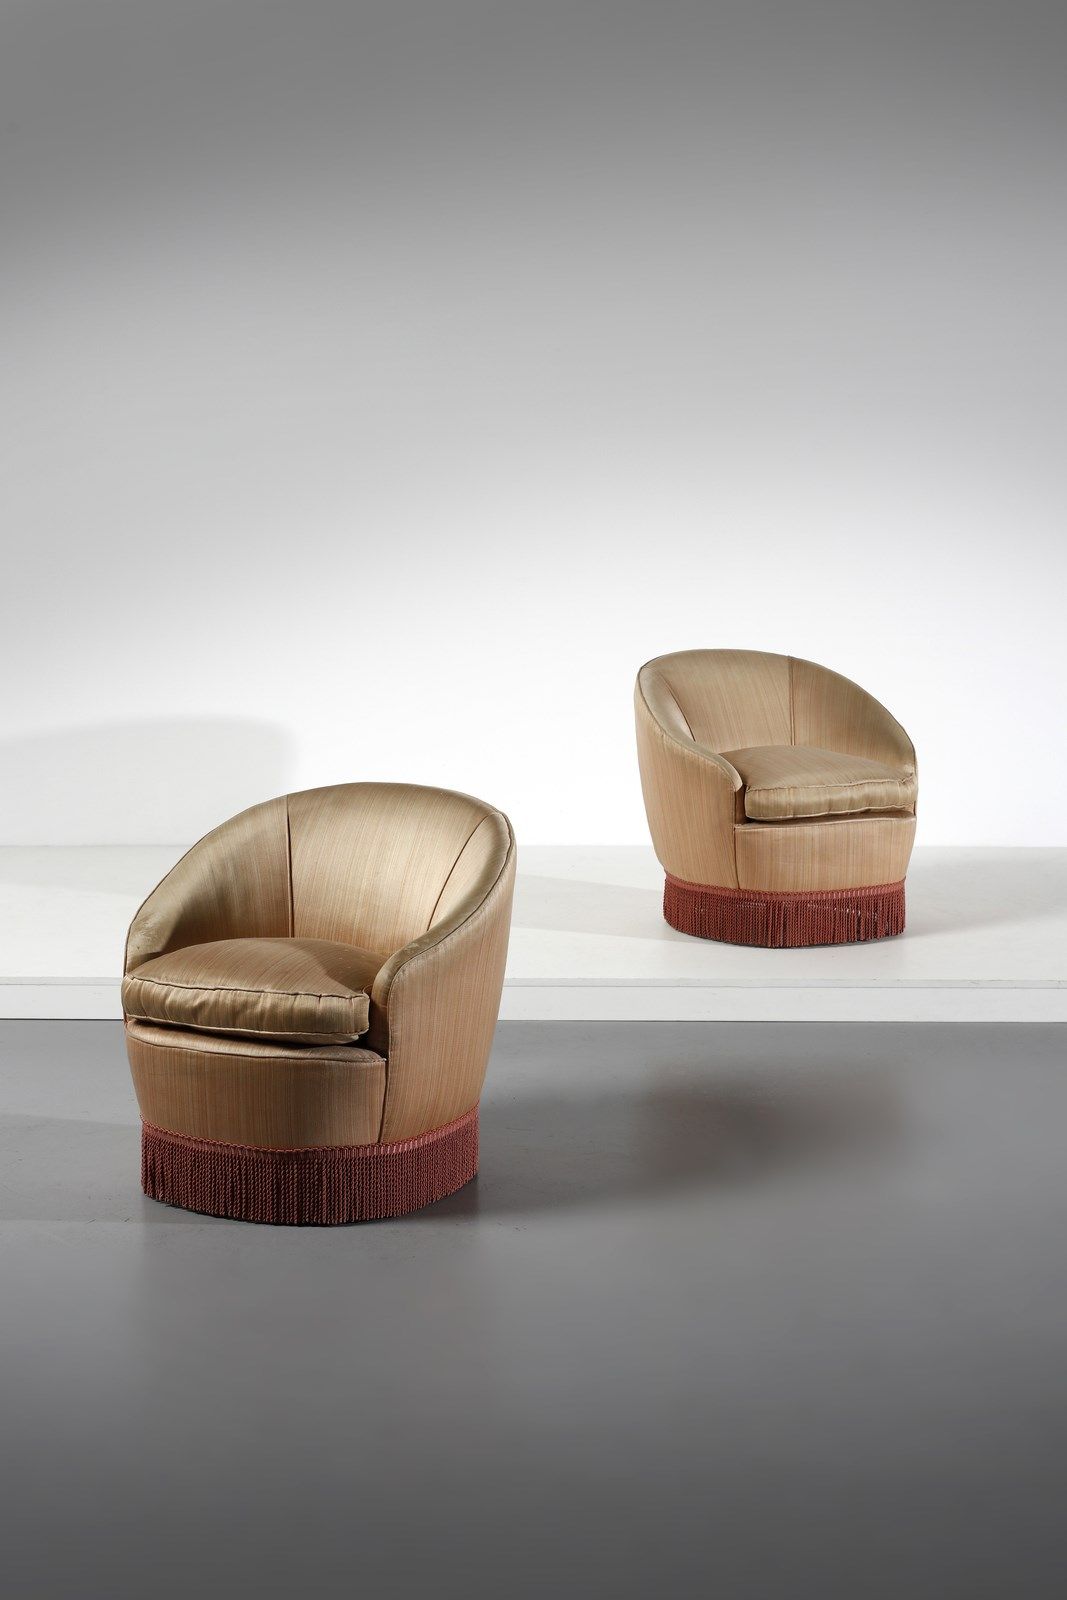 PONTI GIO (1891 - 1979) PONTI GIO (1891 - 1979). Paire de fauteuils. Années 1950&hellip;